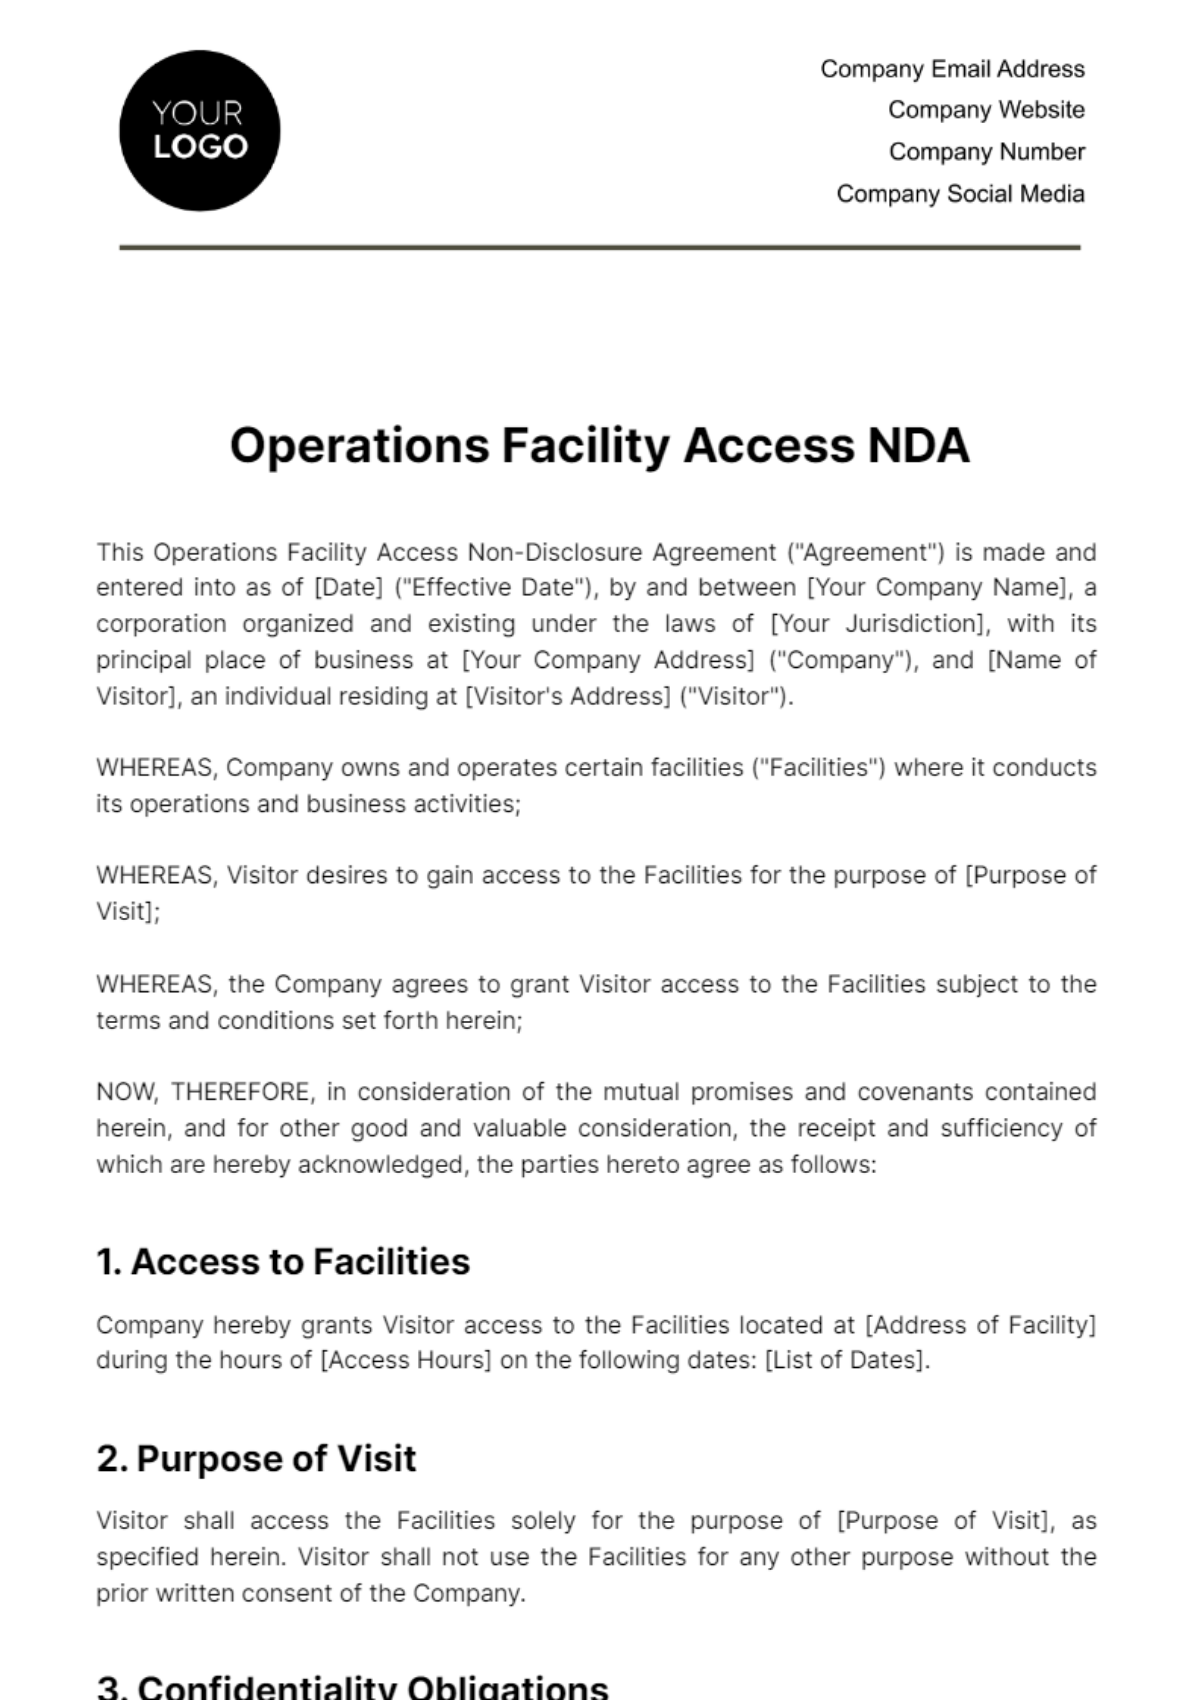 Free Operations Facility Access NDA Template